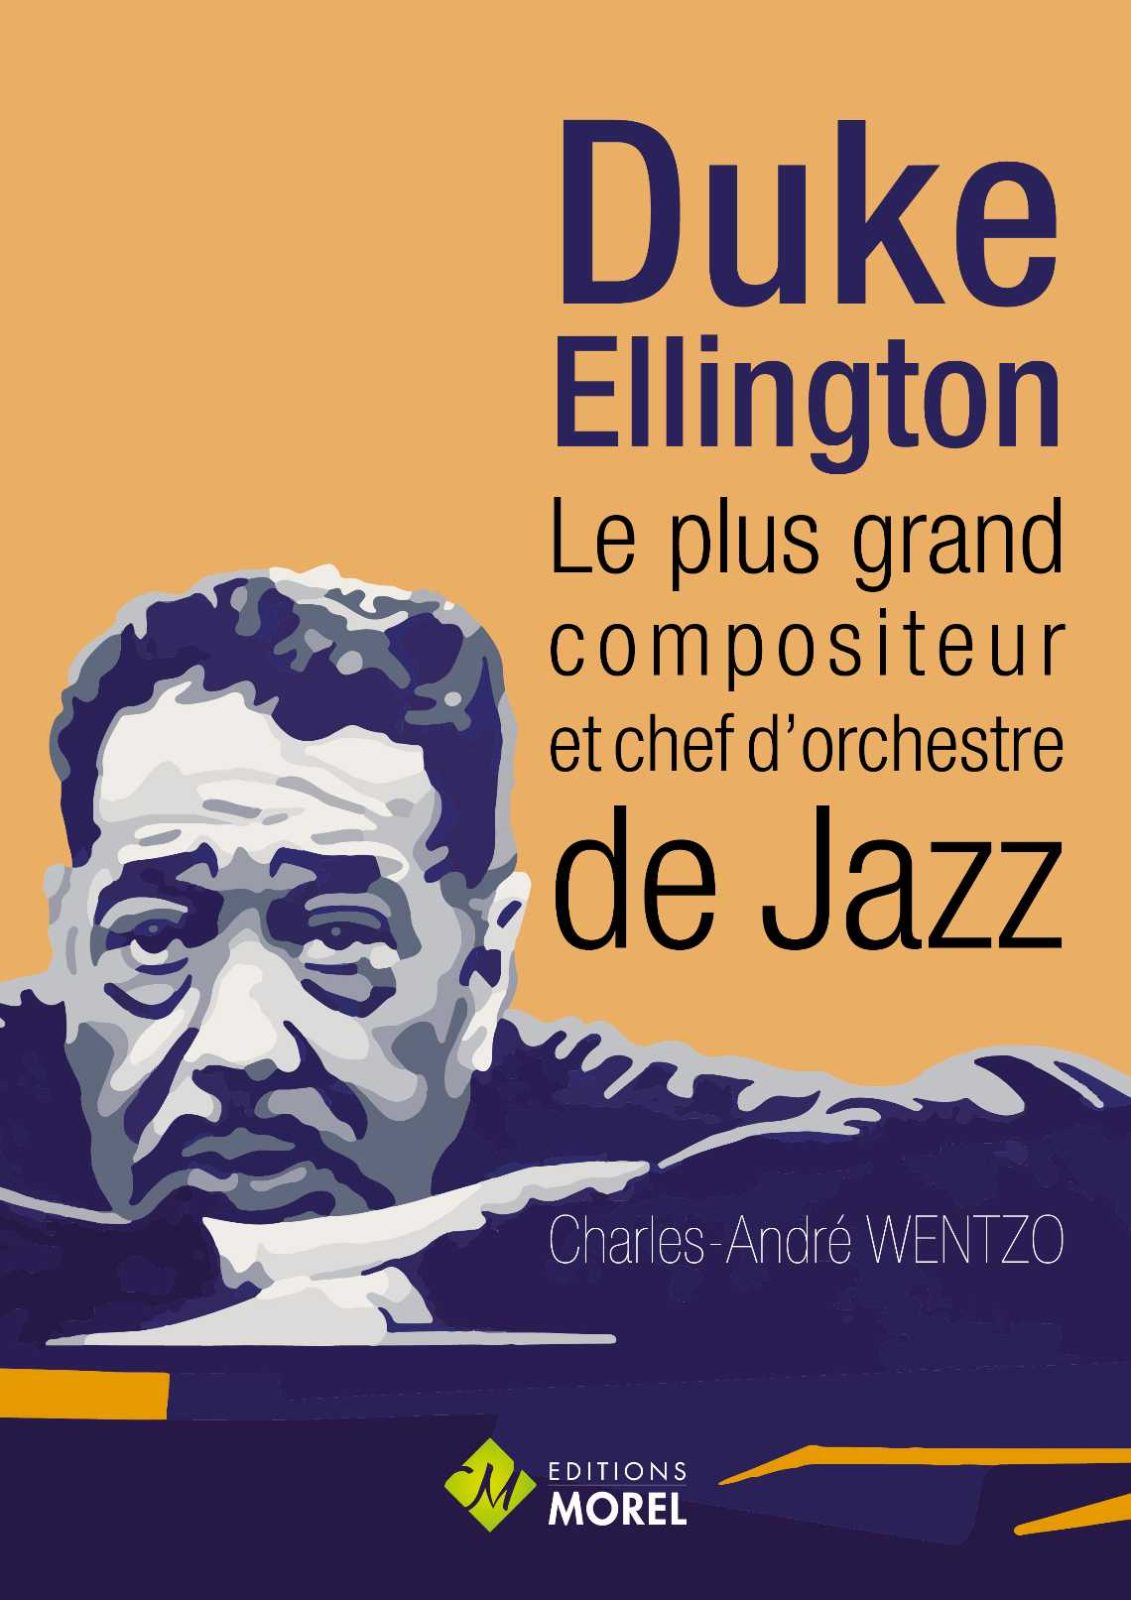 I love to listen to… Duke Ellington (Charles-André Wentzo)